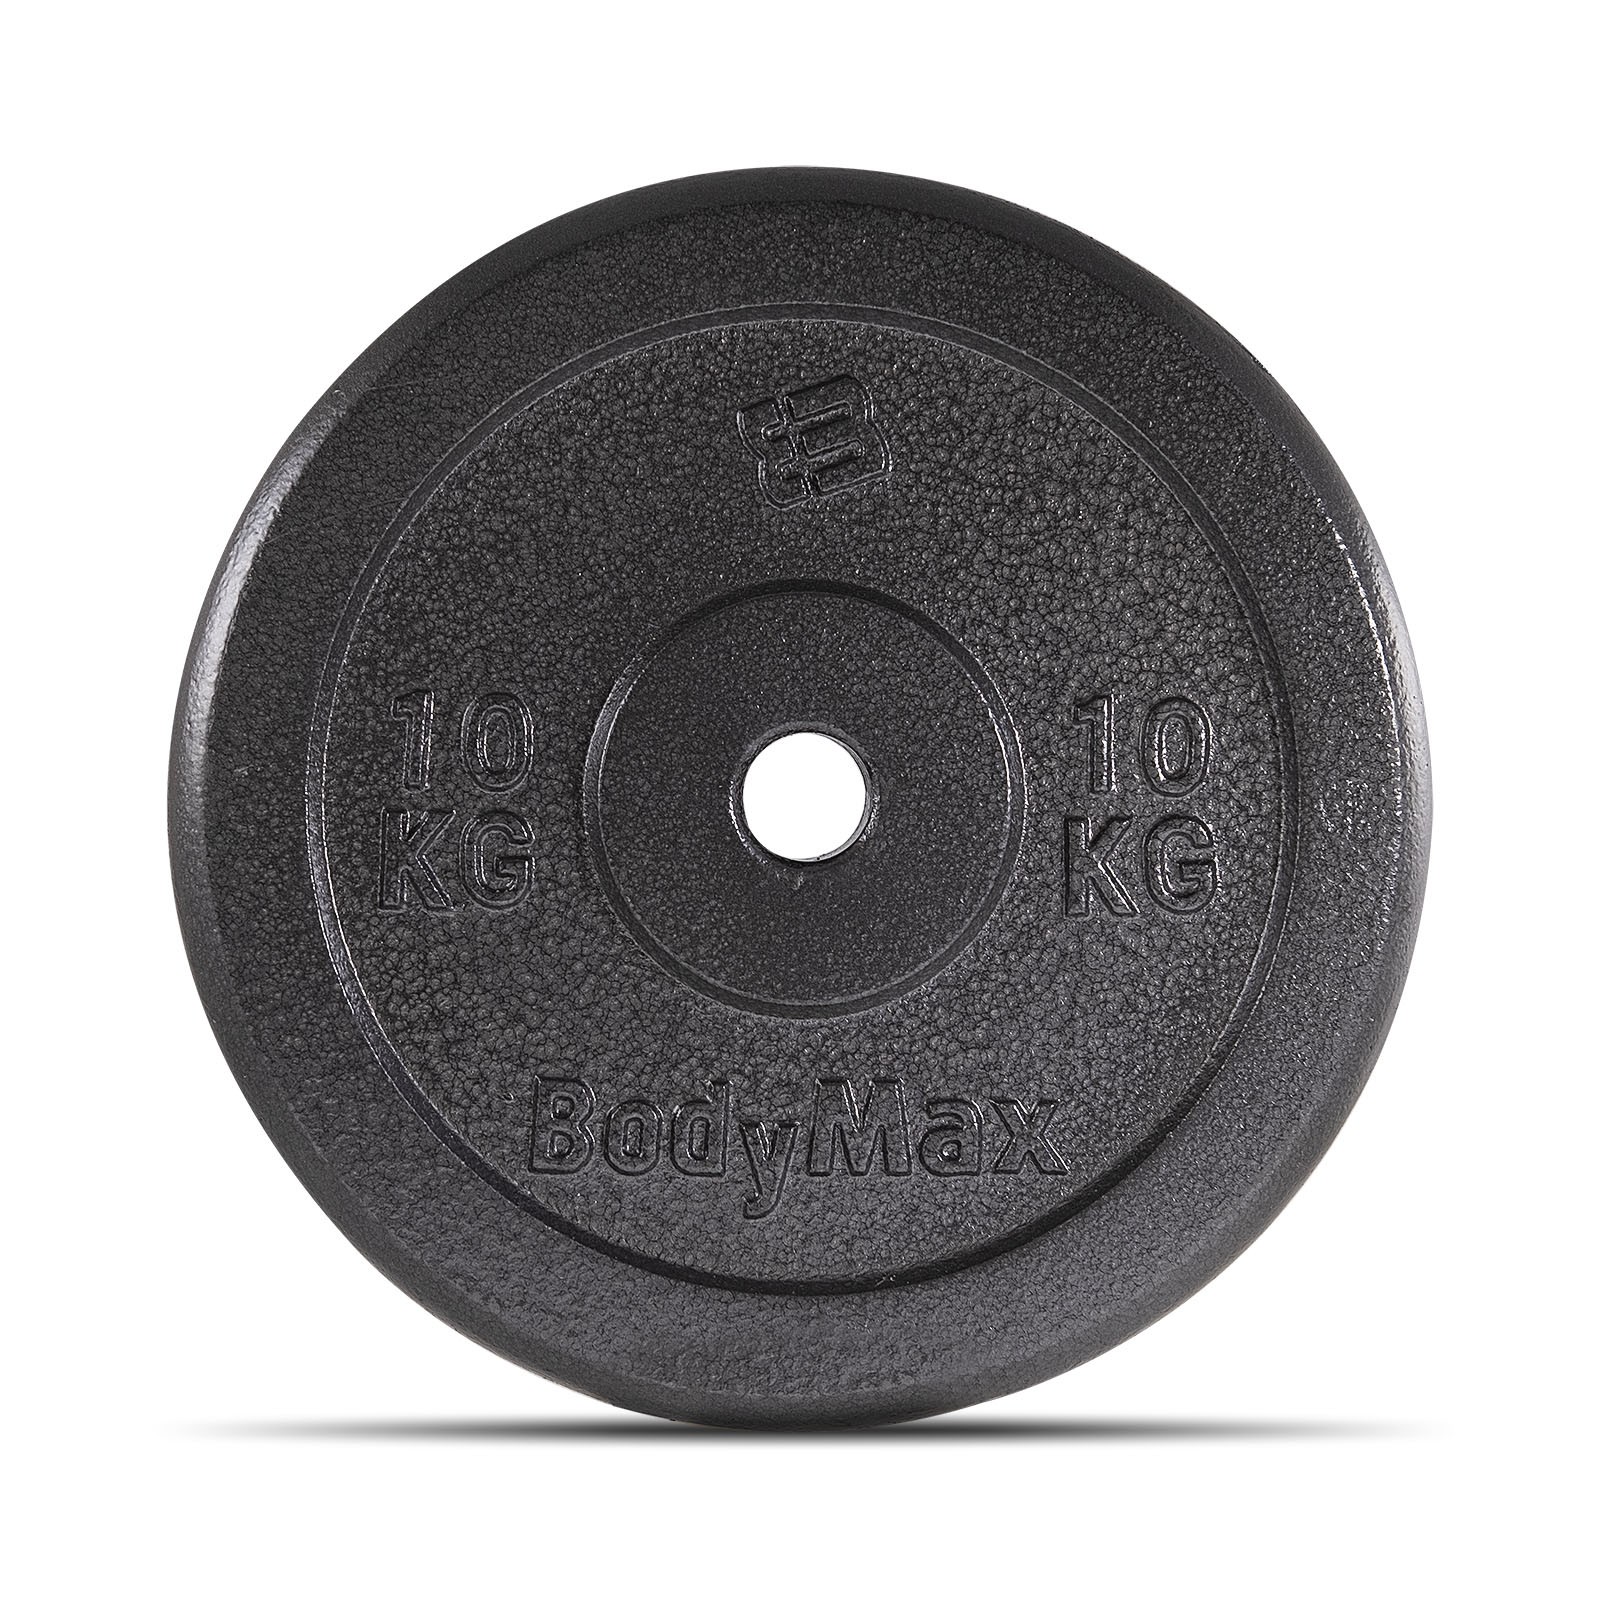 Bodymax Standard Hammertone Weight Disc Plates 4 x 2.5kg